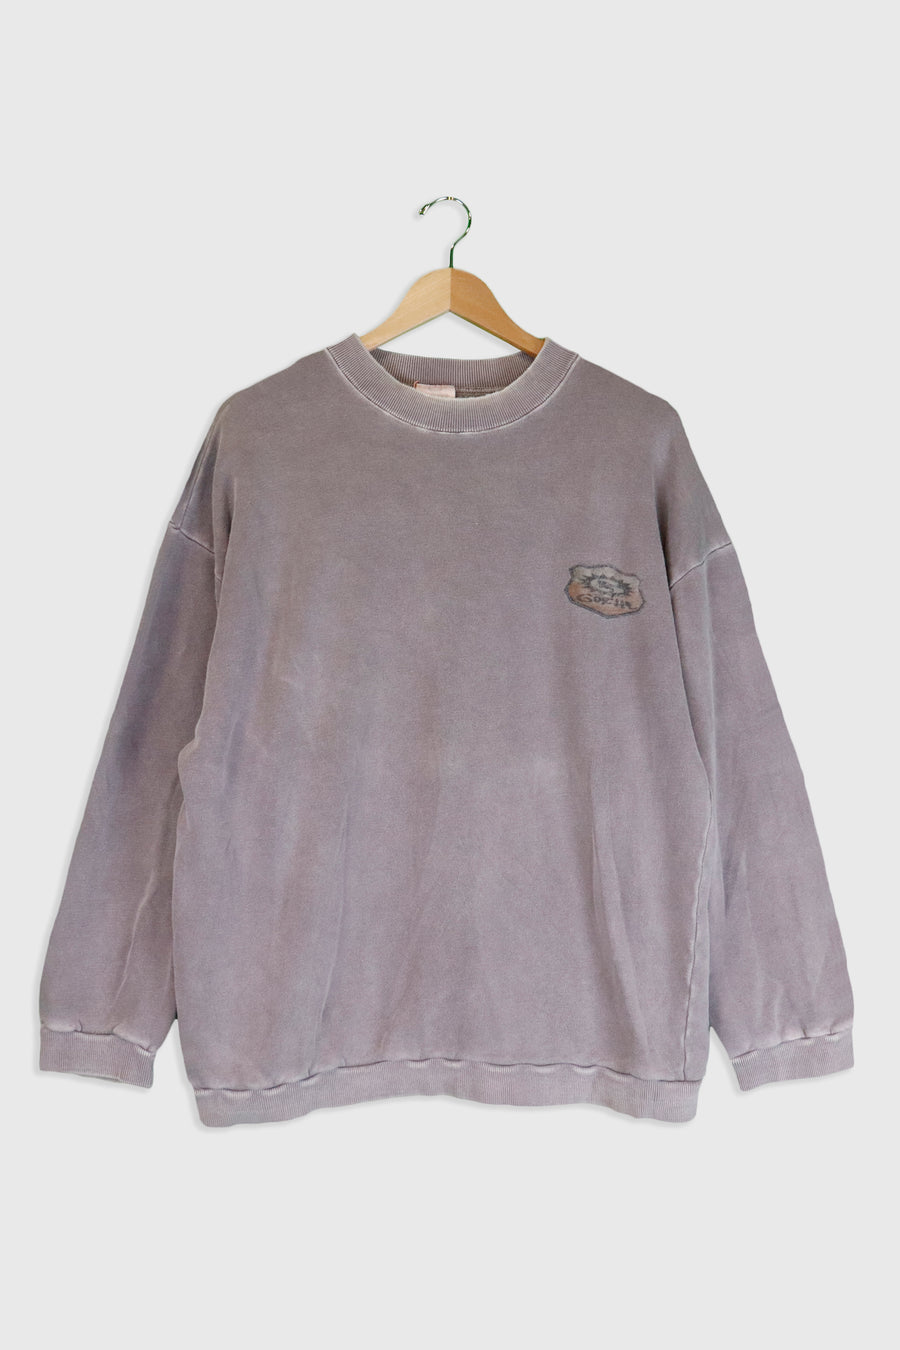 Vintage Gotcha Back Design Sweatshirt Sz L